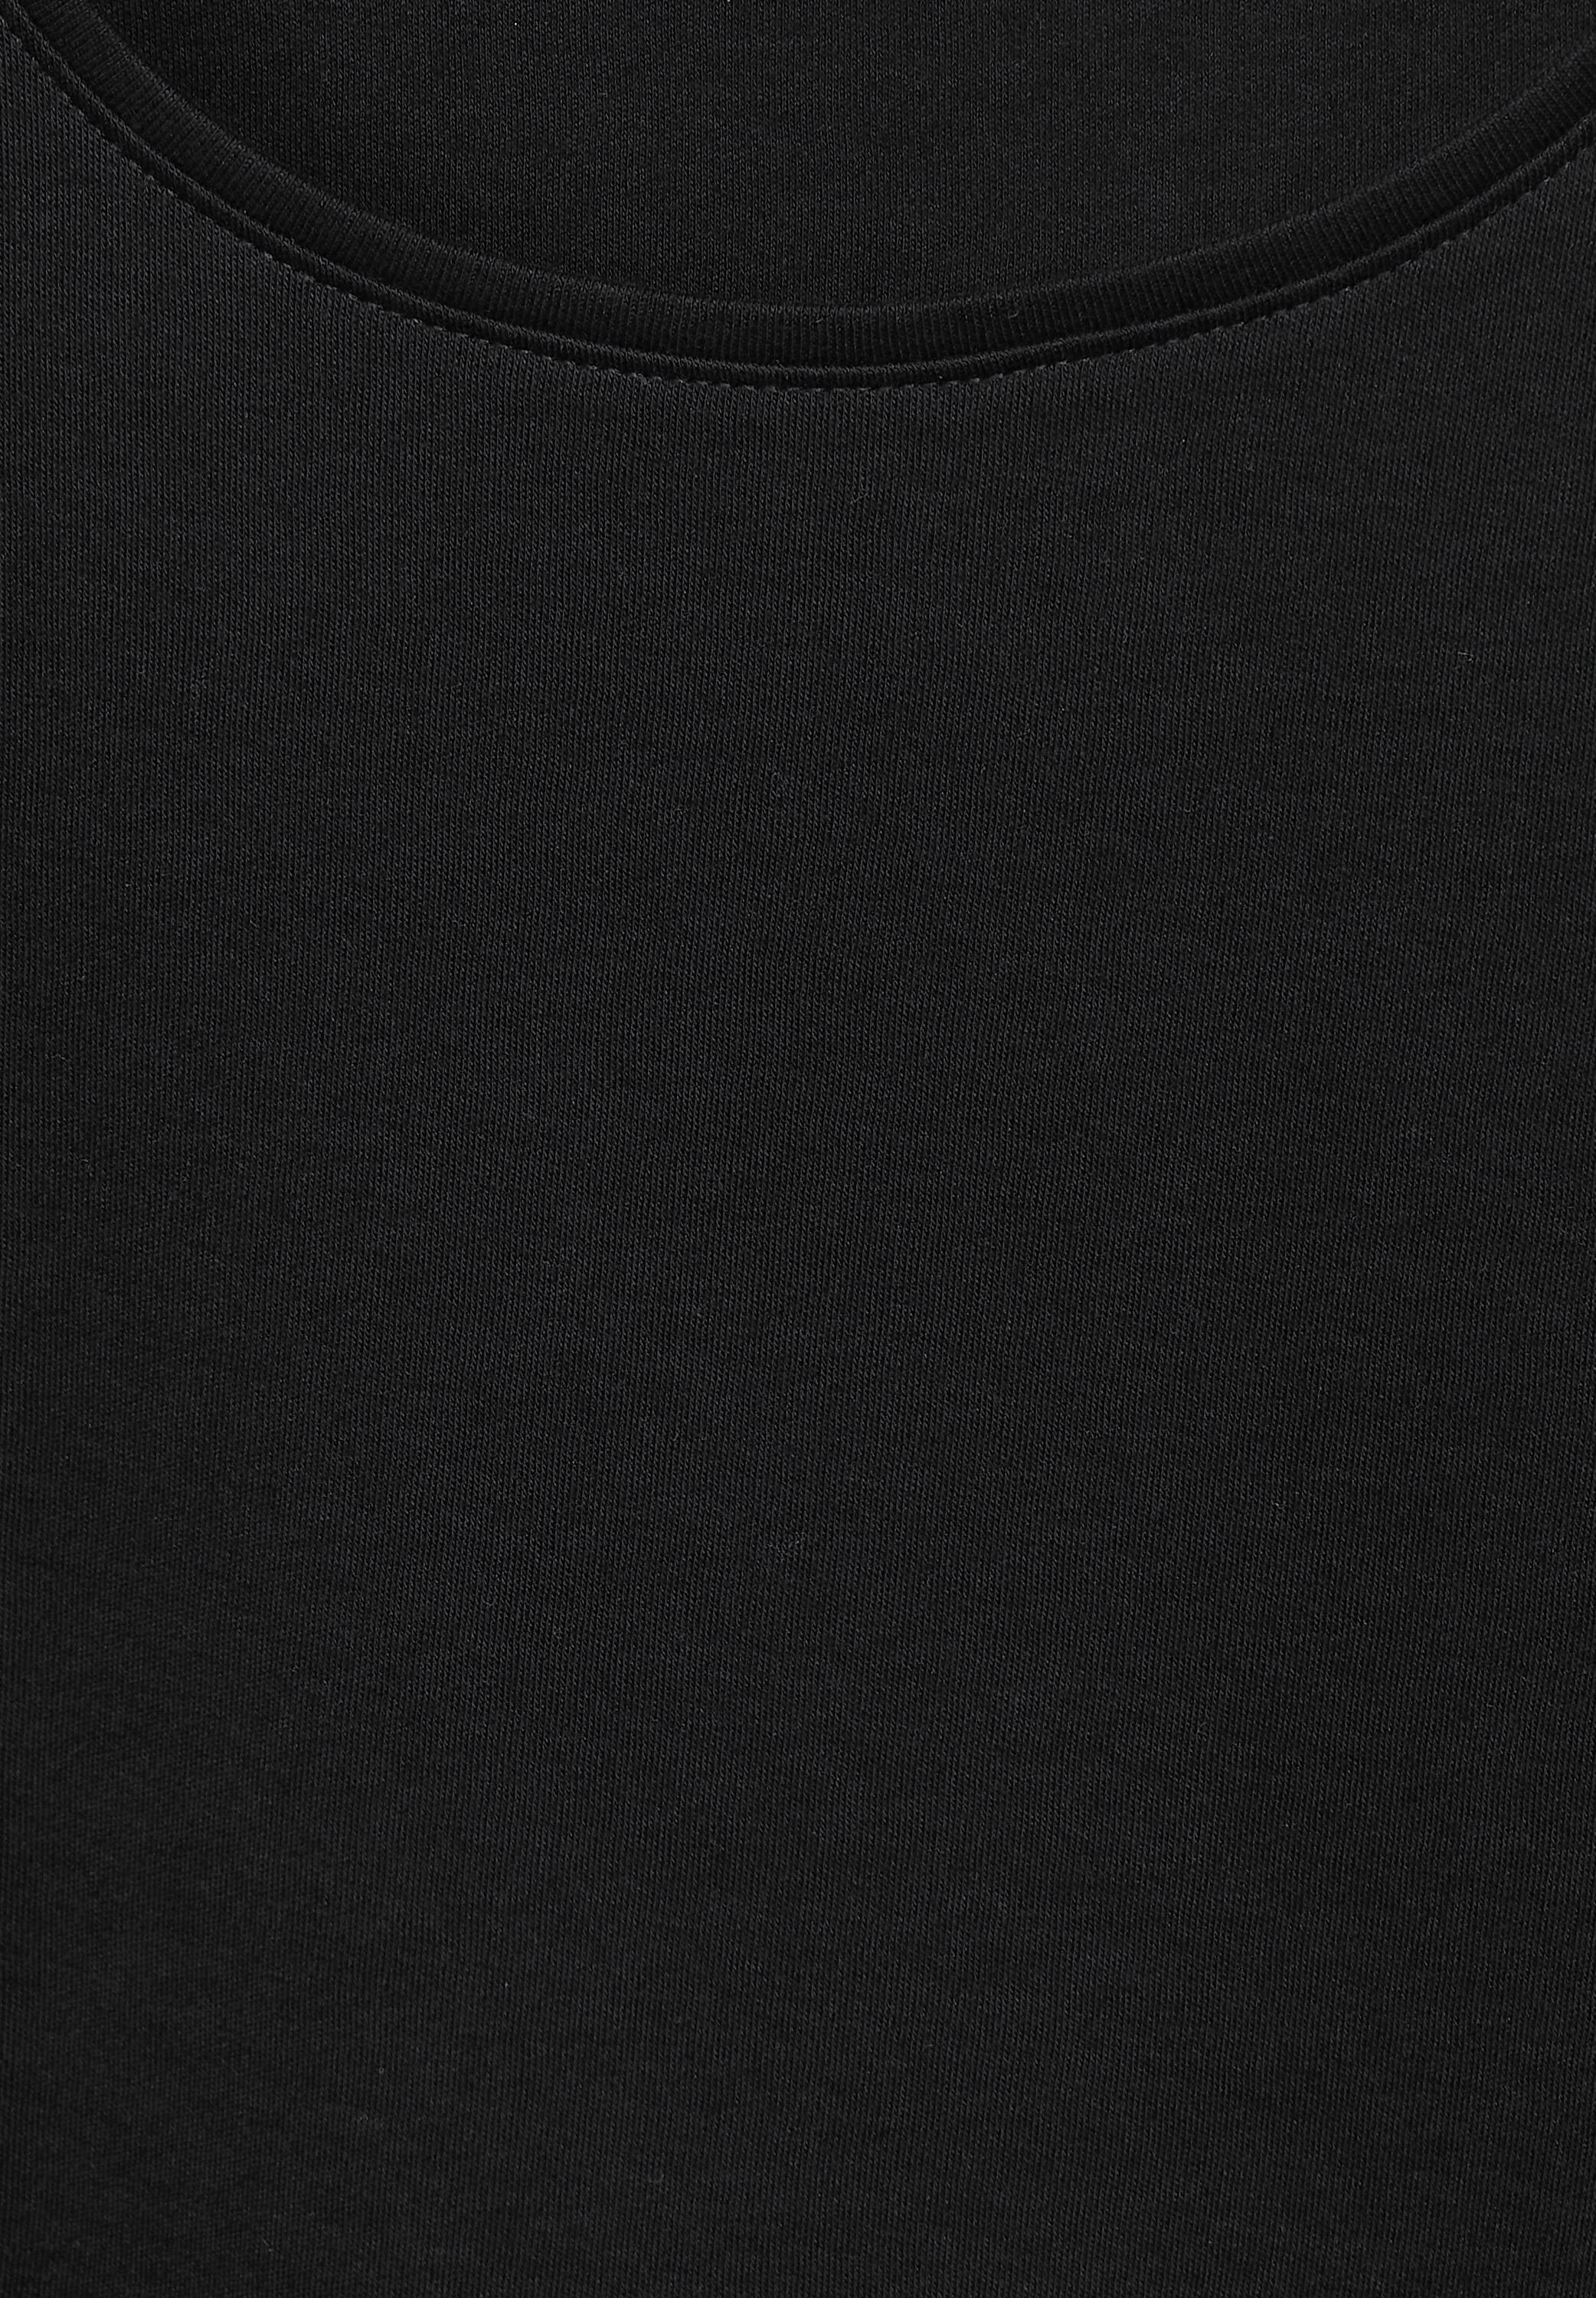 Cecil T-Shirt, Basic